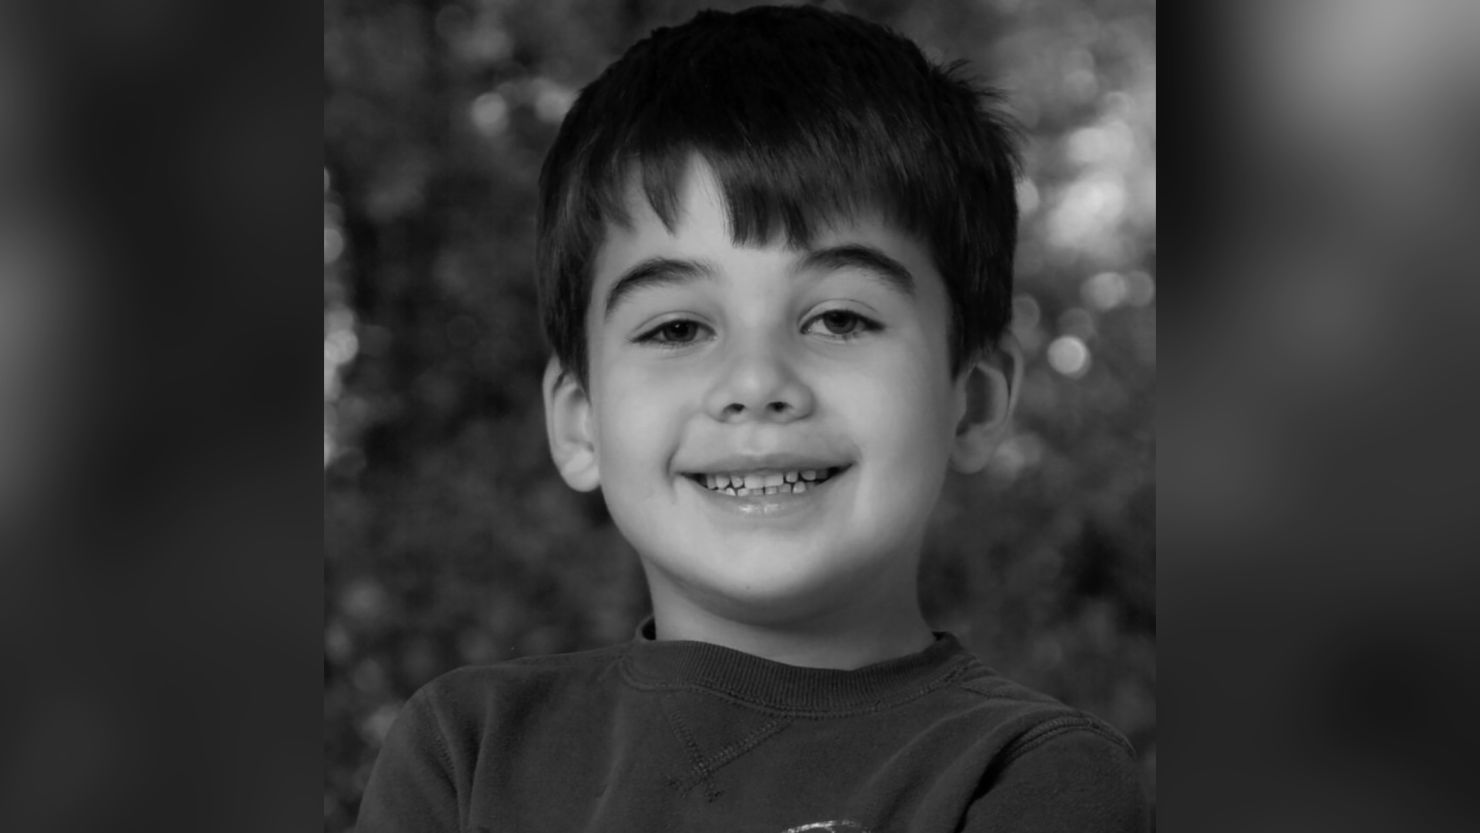 Noah Pozner, 6, was killed in the 2012 Sandy Hook massacre.